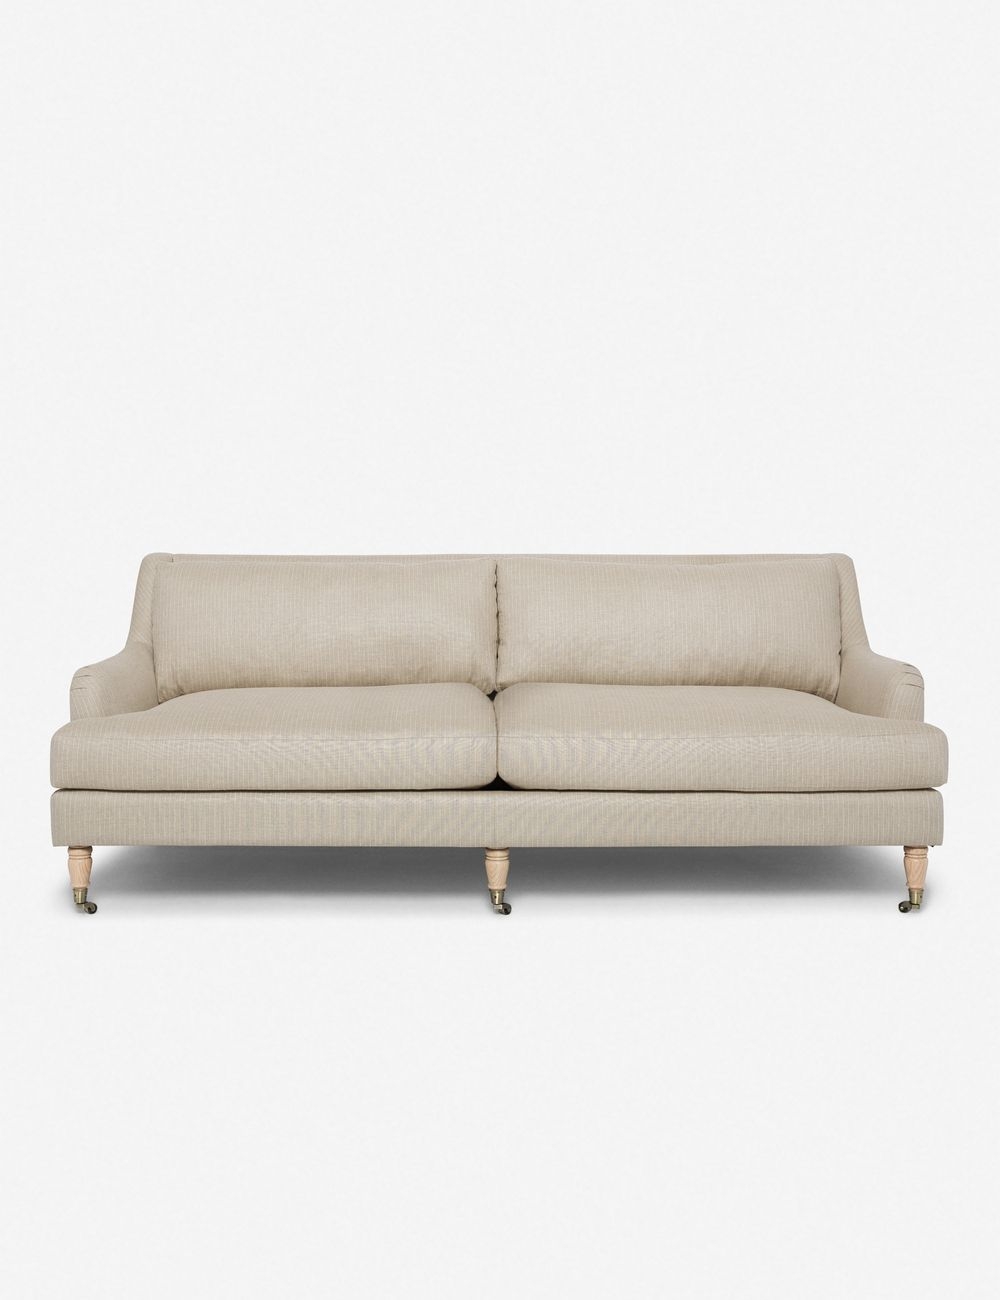 Rivington Sofa by Ginny Macdonald - Image 1